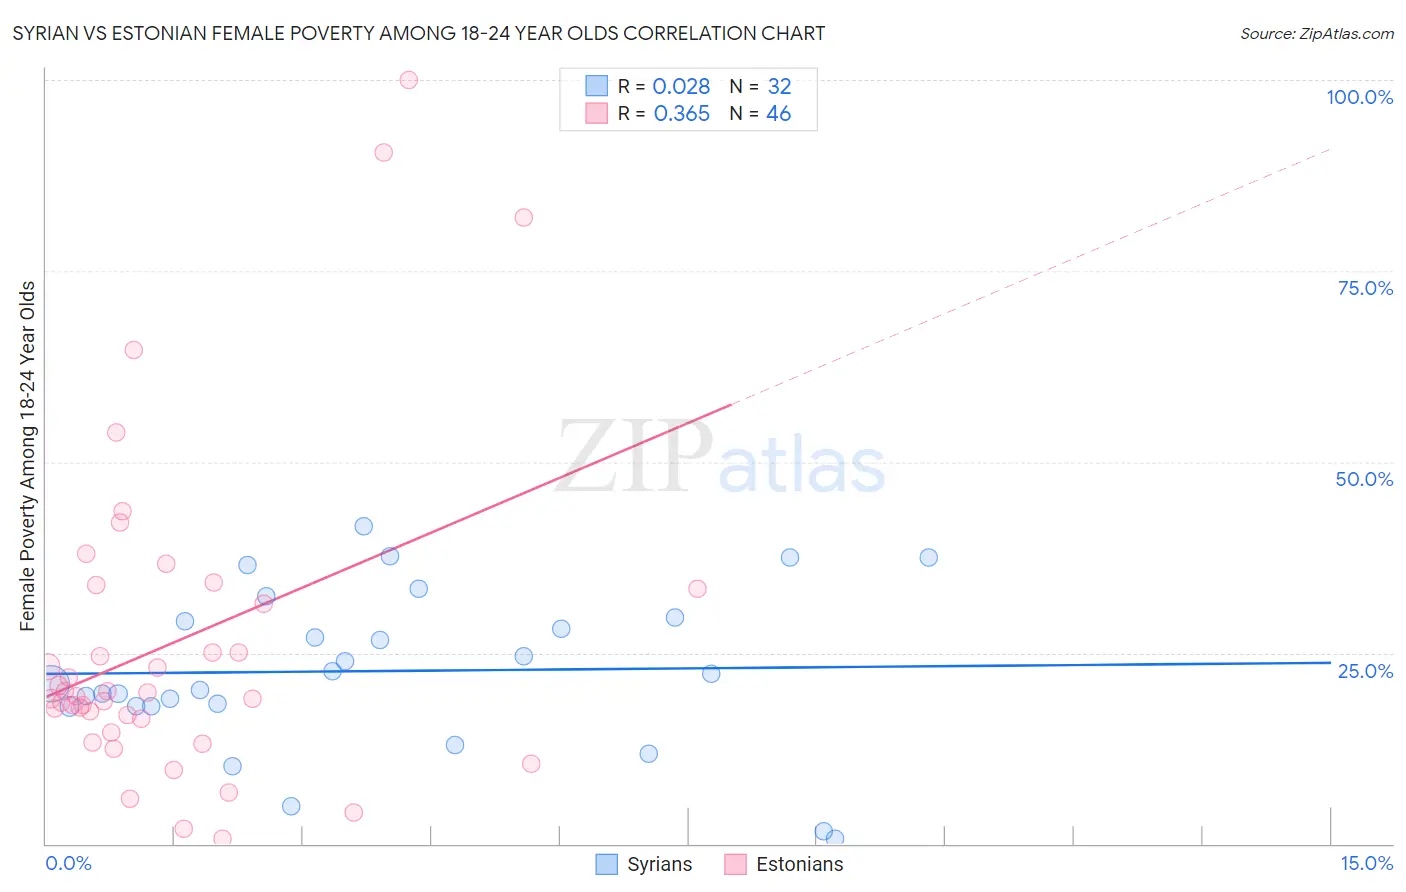 Syrian vs Estonian Female Poverty Among 18-24 Year Olds